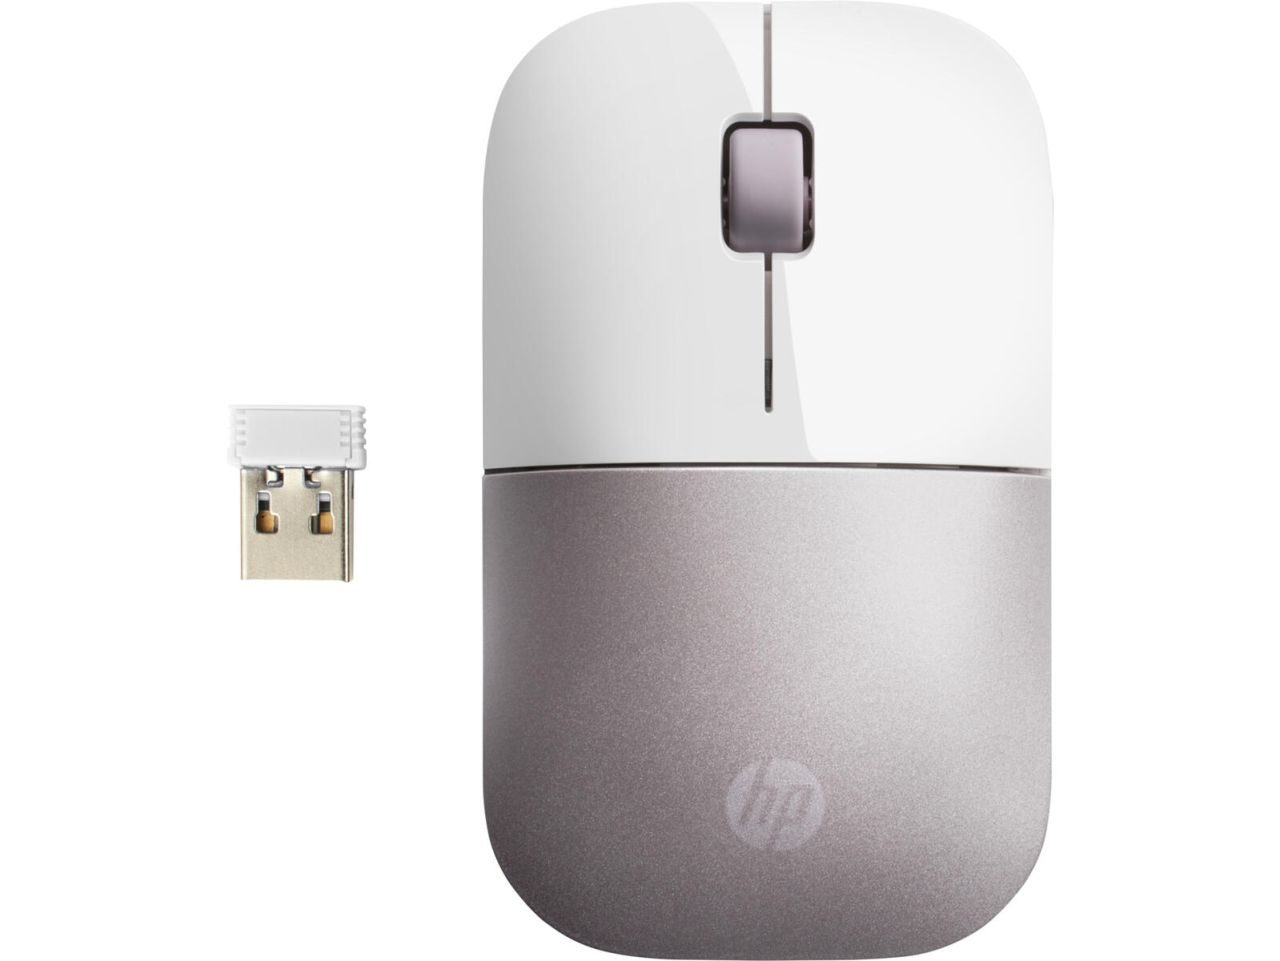 HP Z3700 Wireless Maus pink